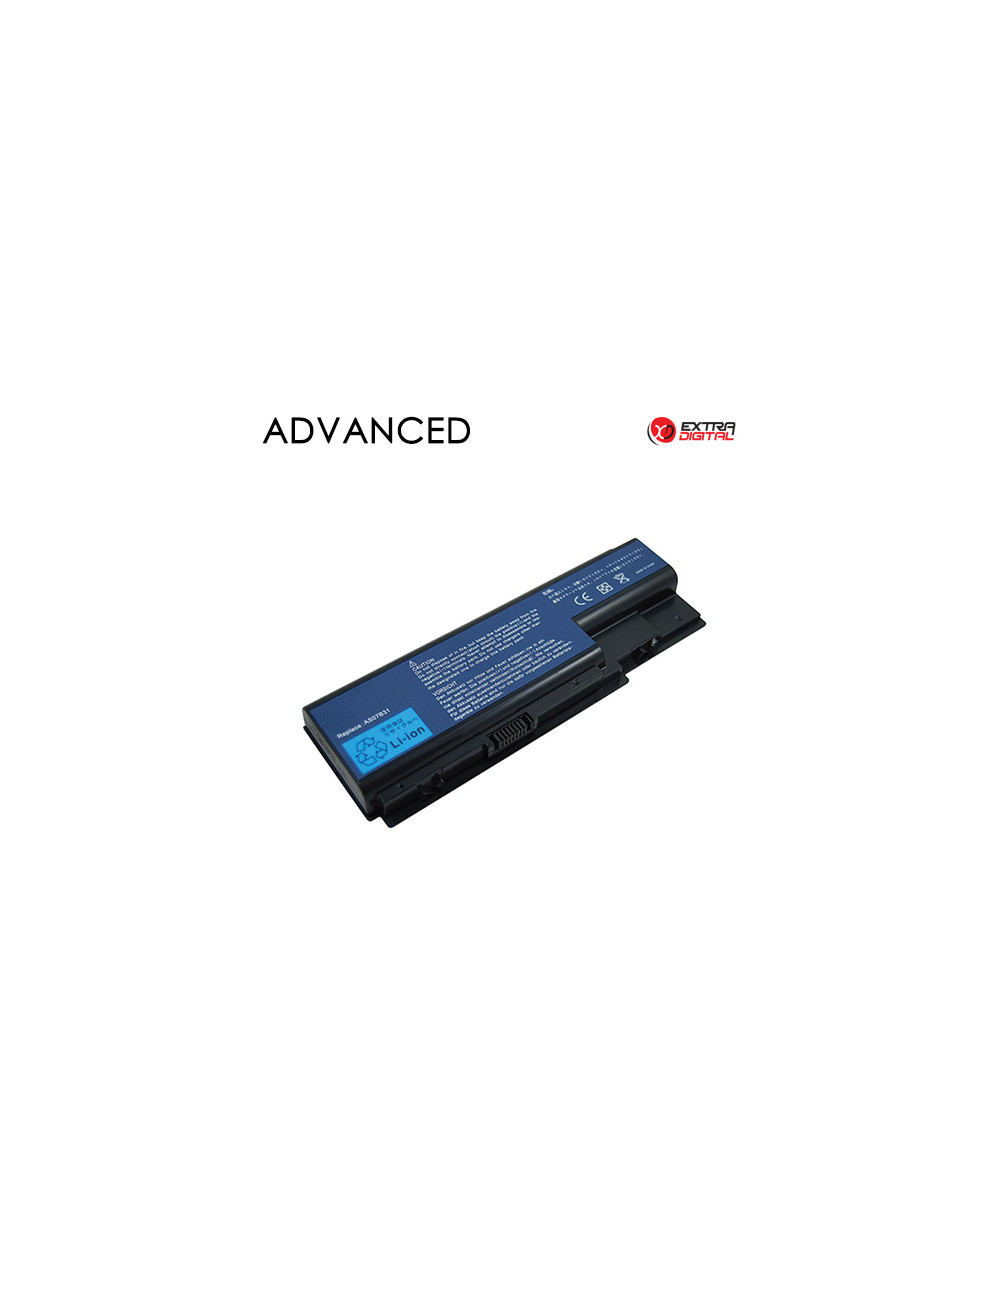 Notebook Battery ACER AS07B31, 5200 mAh, Extra Digital Advanced,